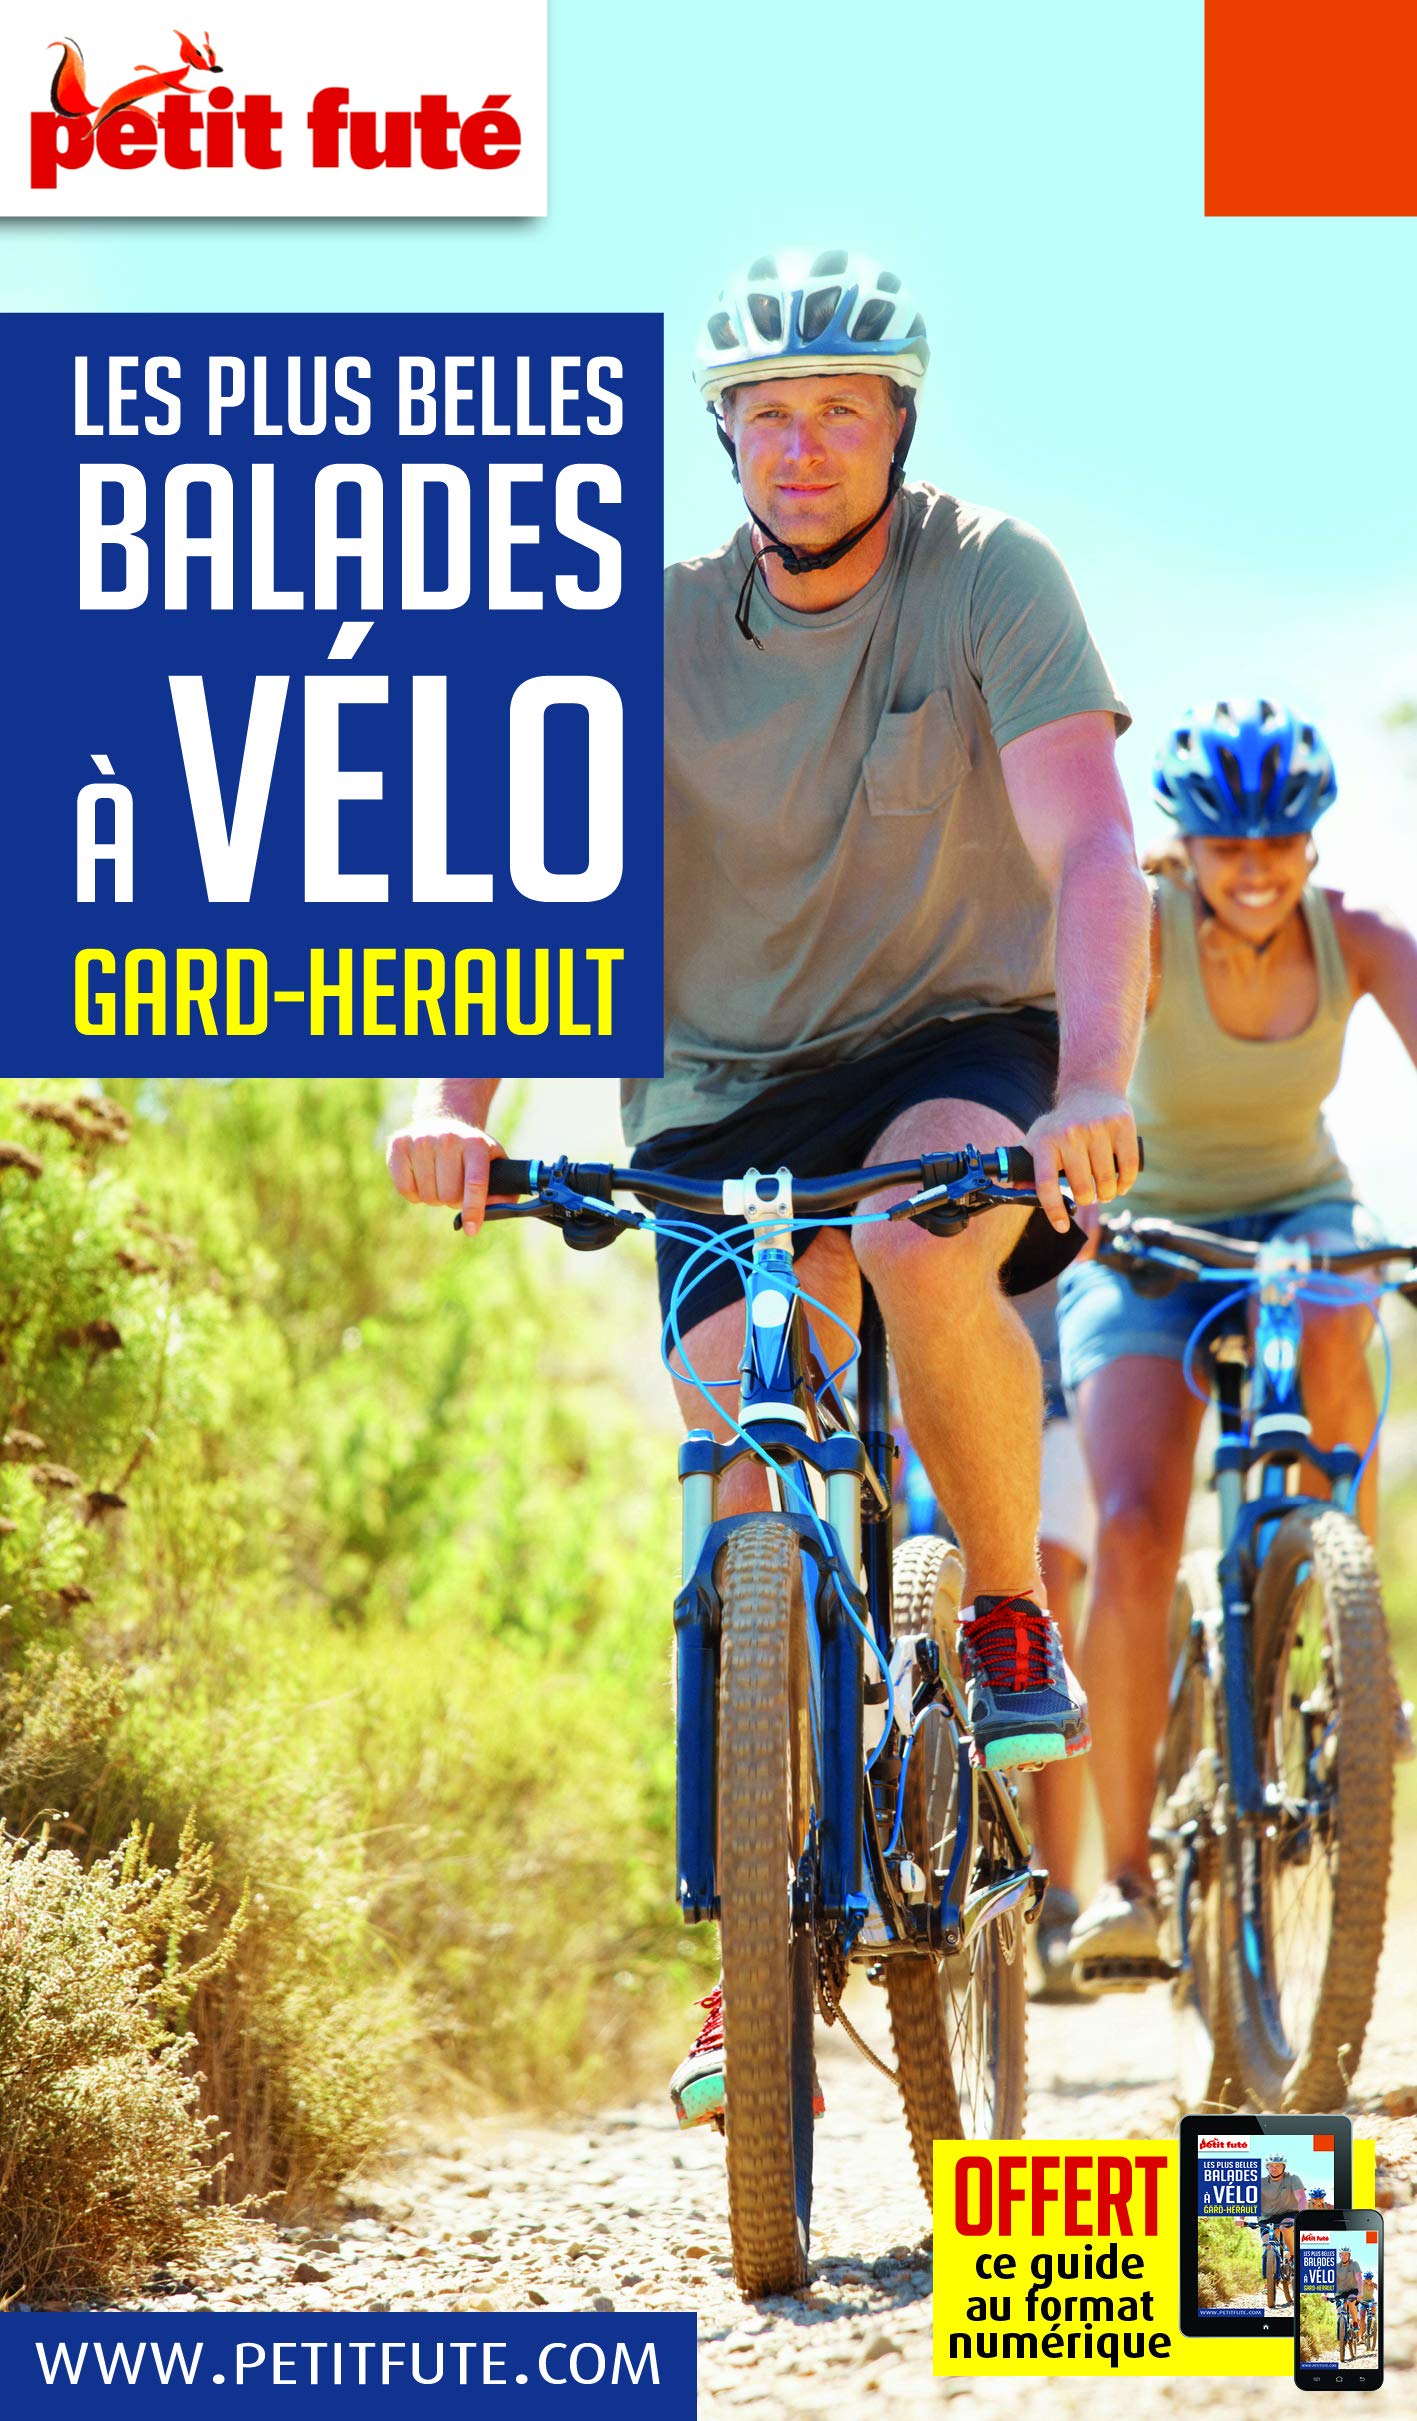 Les plus belles balades à vélo Gard-Herault